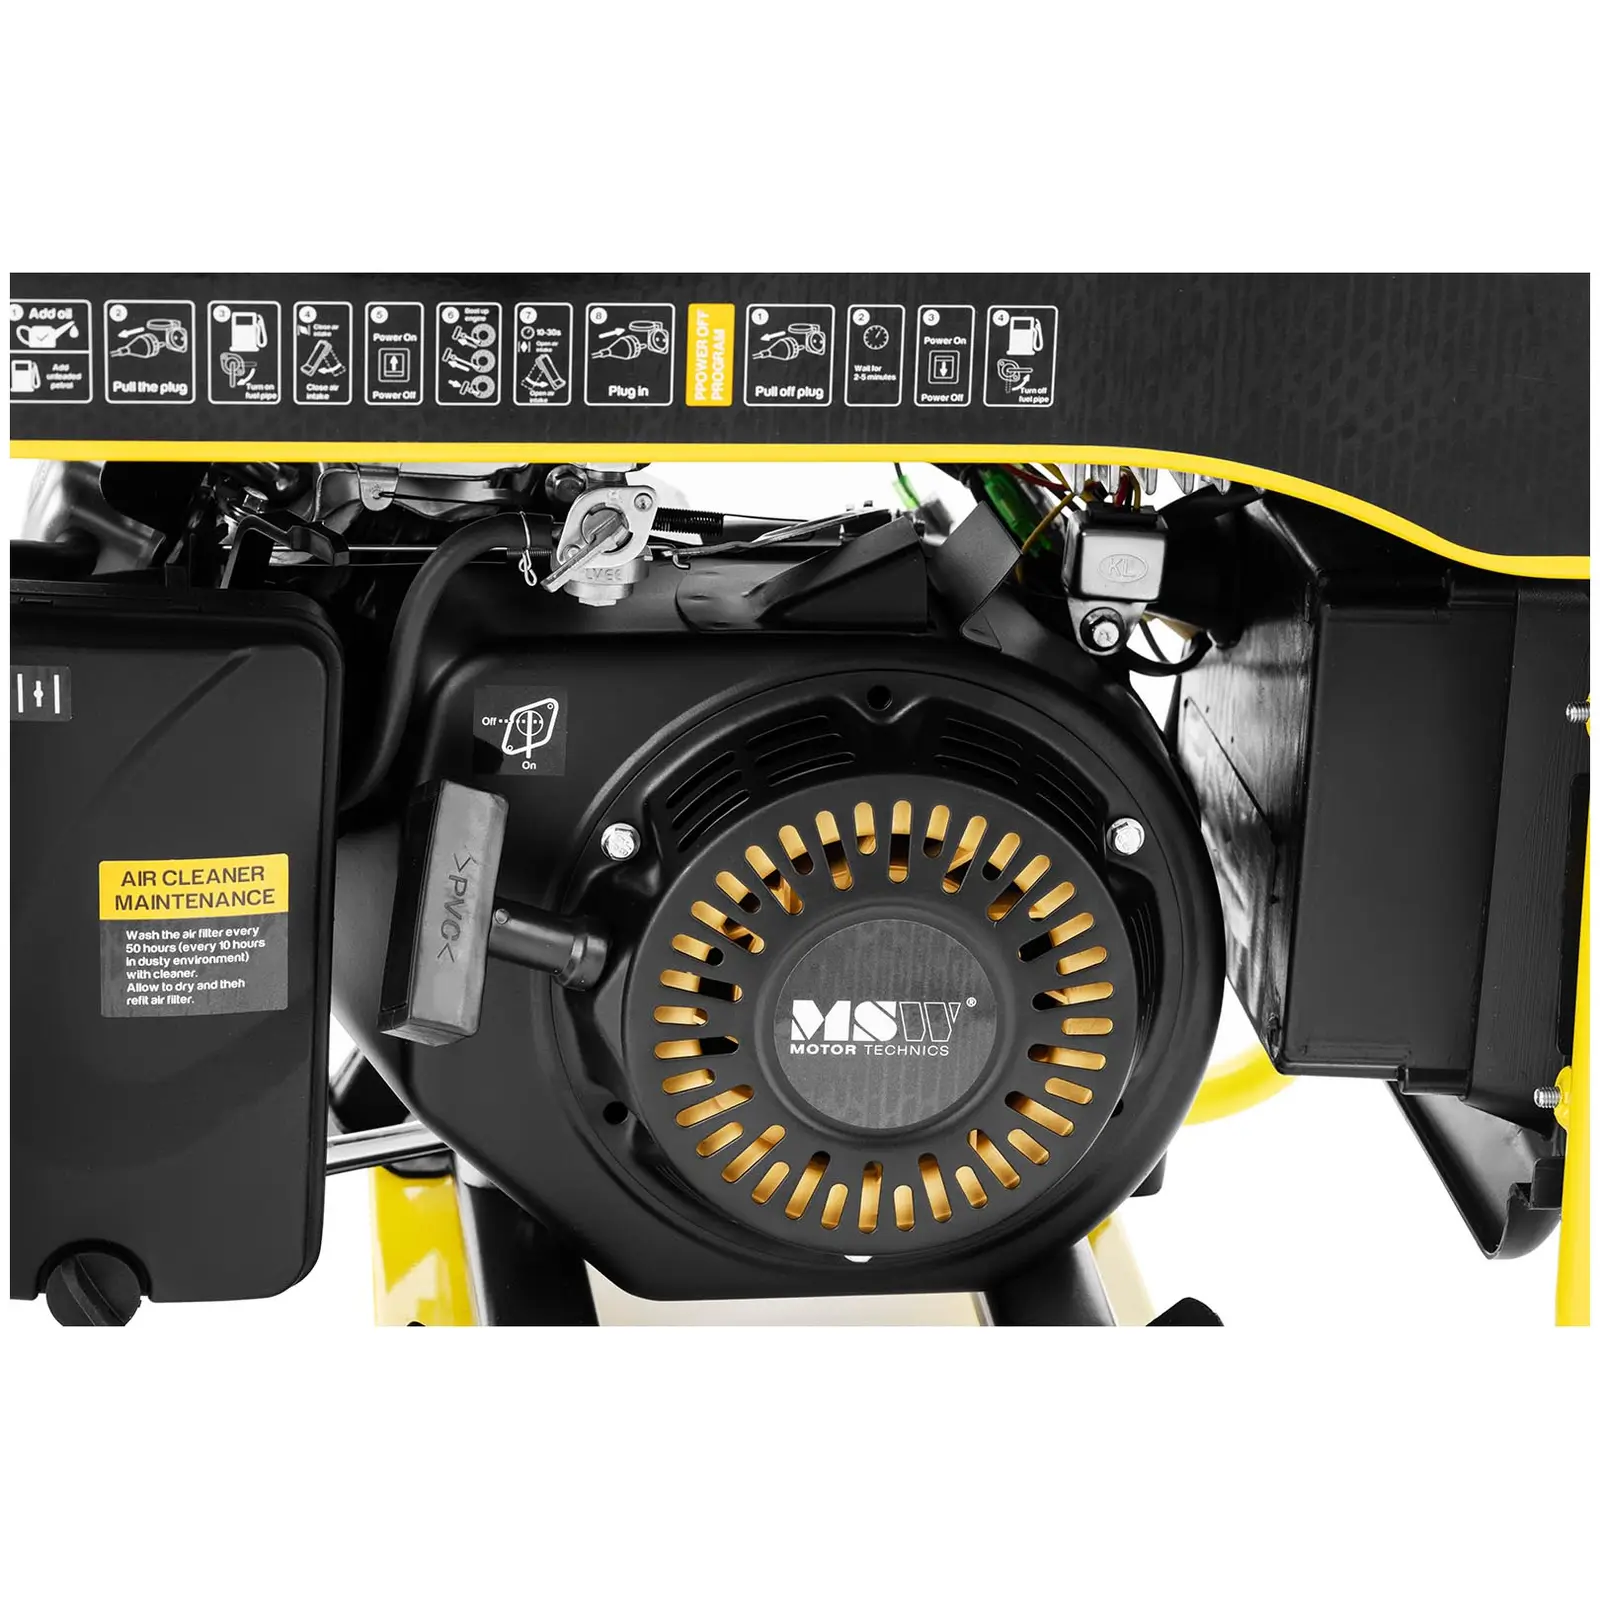 Generatore di corrente a benzina - Inverter -3500 W - 230 V CA - Avvio manuale